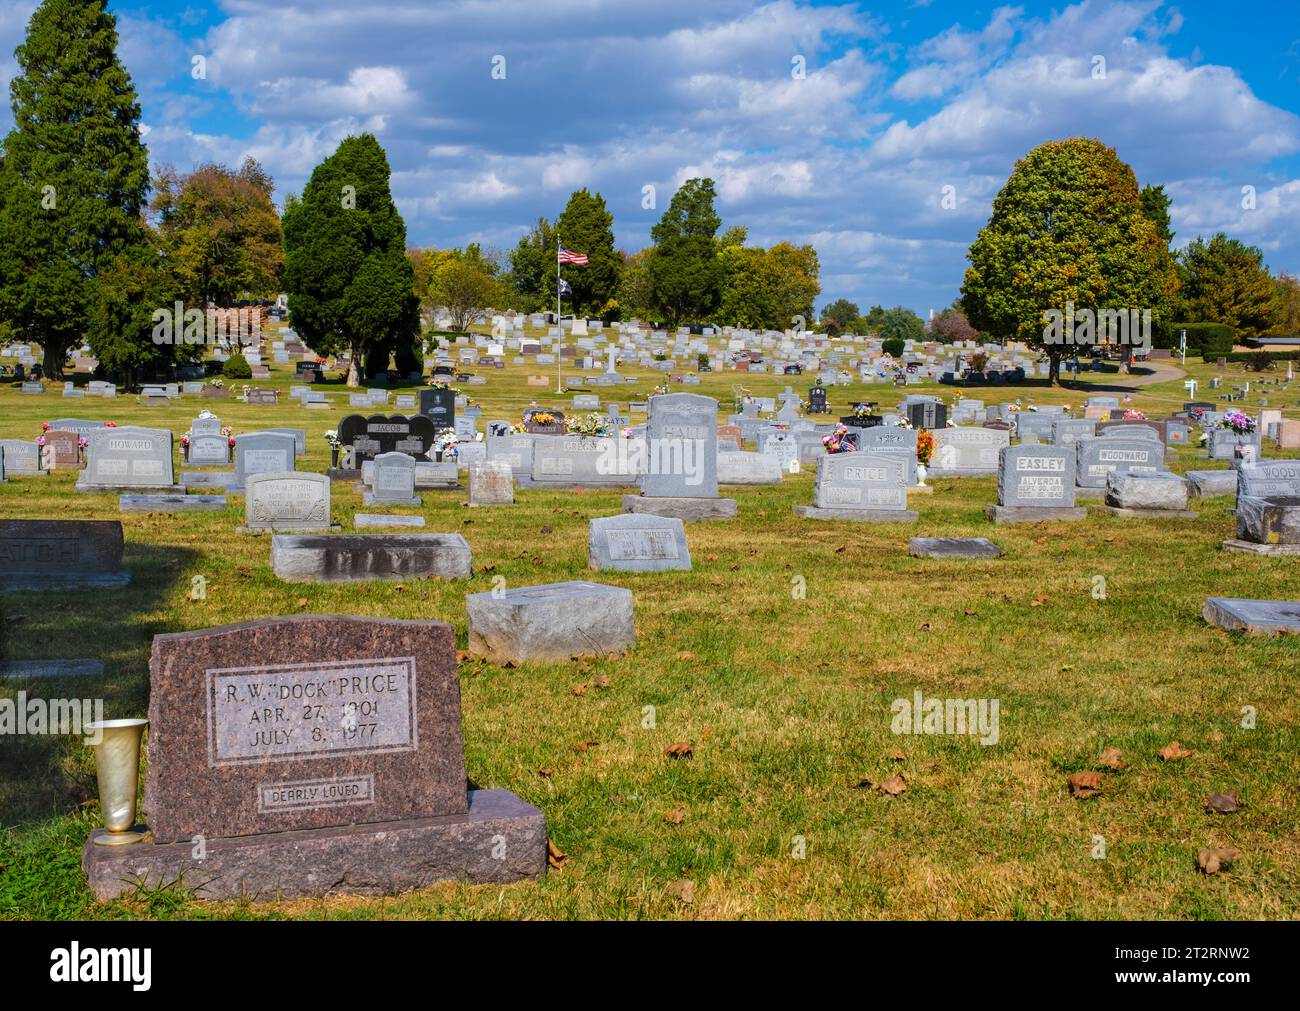 A Protestant American Cemetery, Elmwood Cemetery, Owensboro, Kentucky. Stock Photo